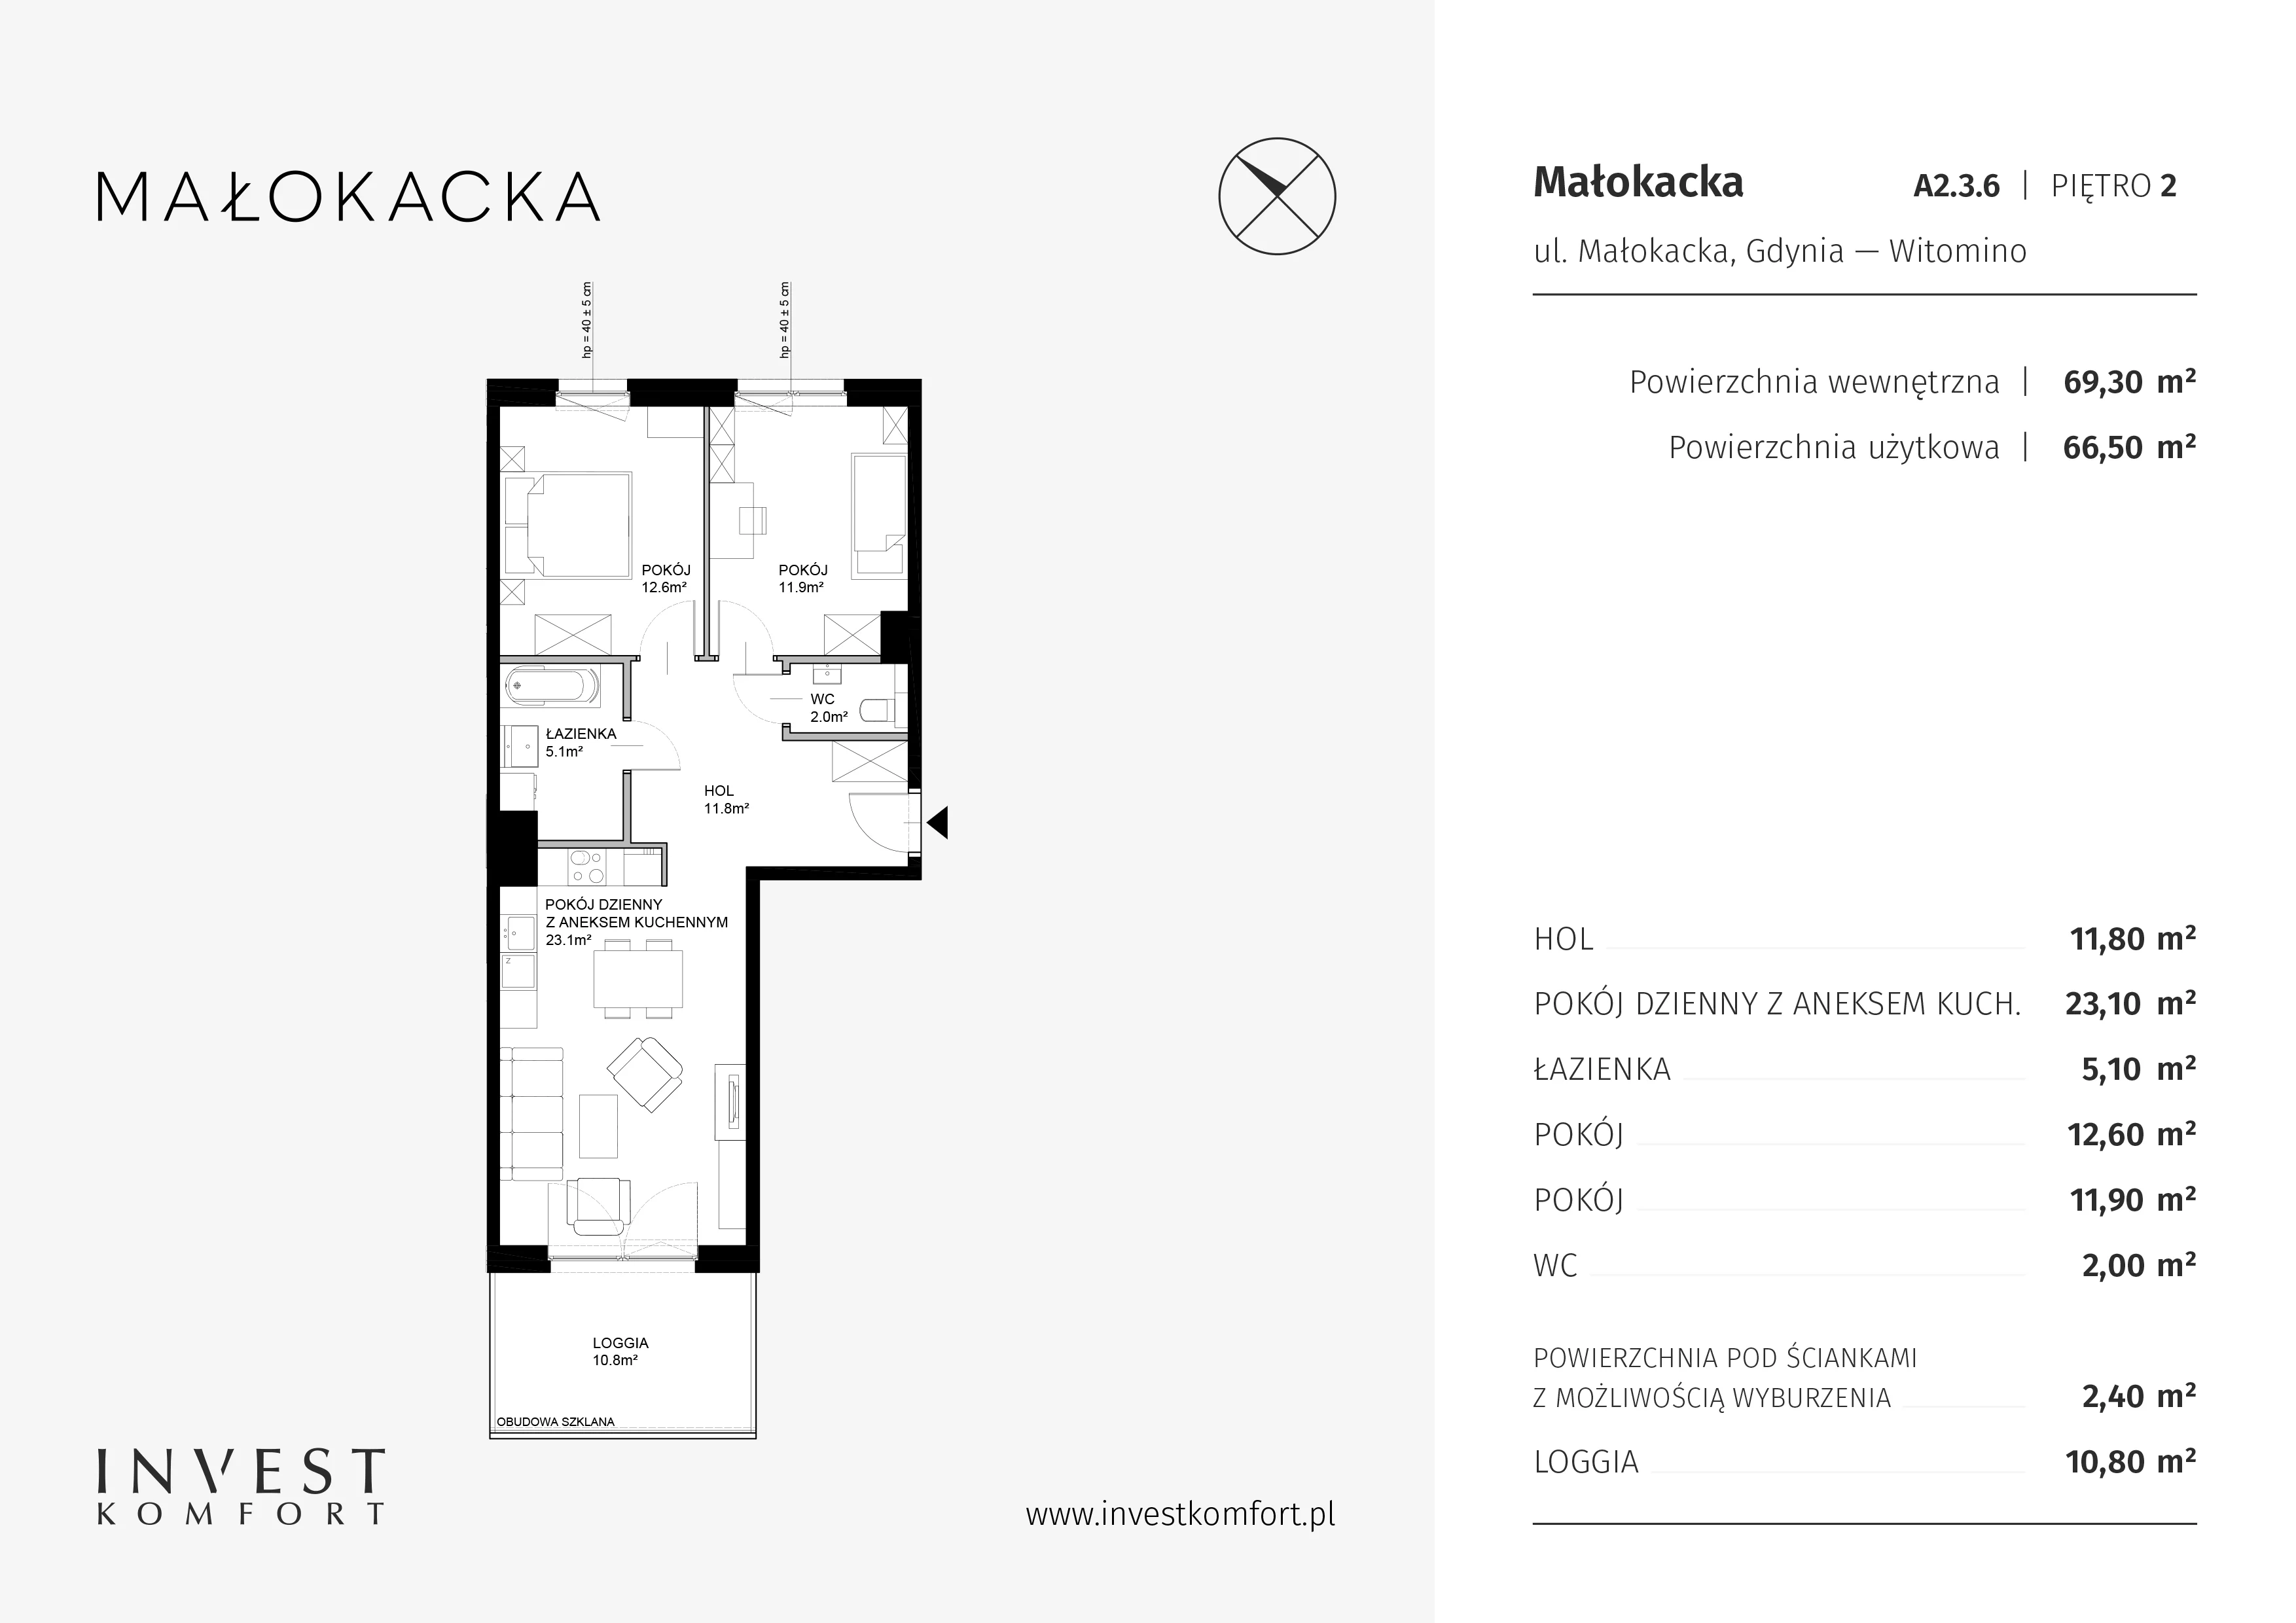 Apartament 69,10 m², piętro 2, oferta nr A2.3.6, Małokacka, Gdynia, Witomino, ul. Małokacka